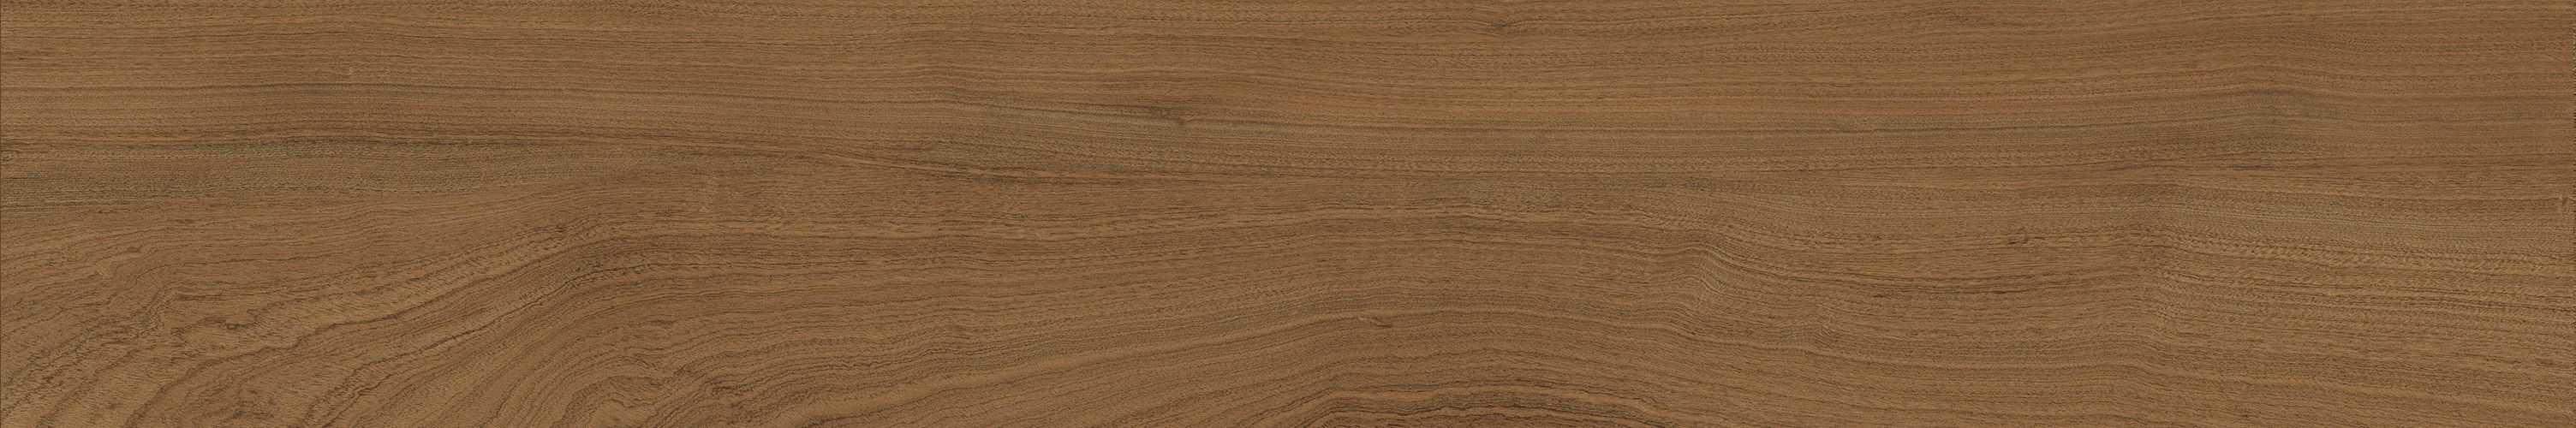 Плитка из керамогранита матовая Italon Элемент Вуд 7.2x60 коричневый (610130000478) плитка из керамогранита матовая italon элемент вуд 20x120 бежевый 610010001088